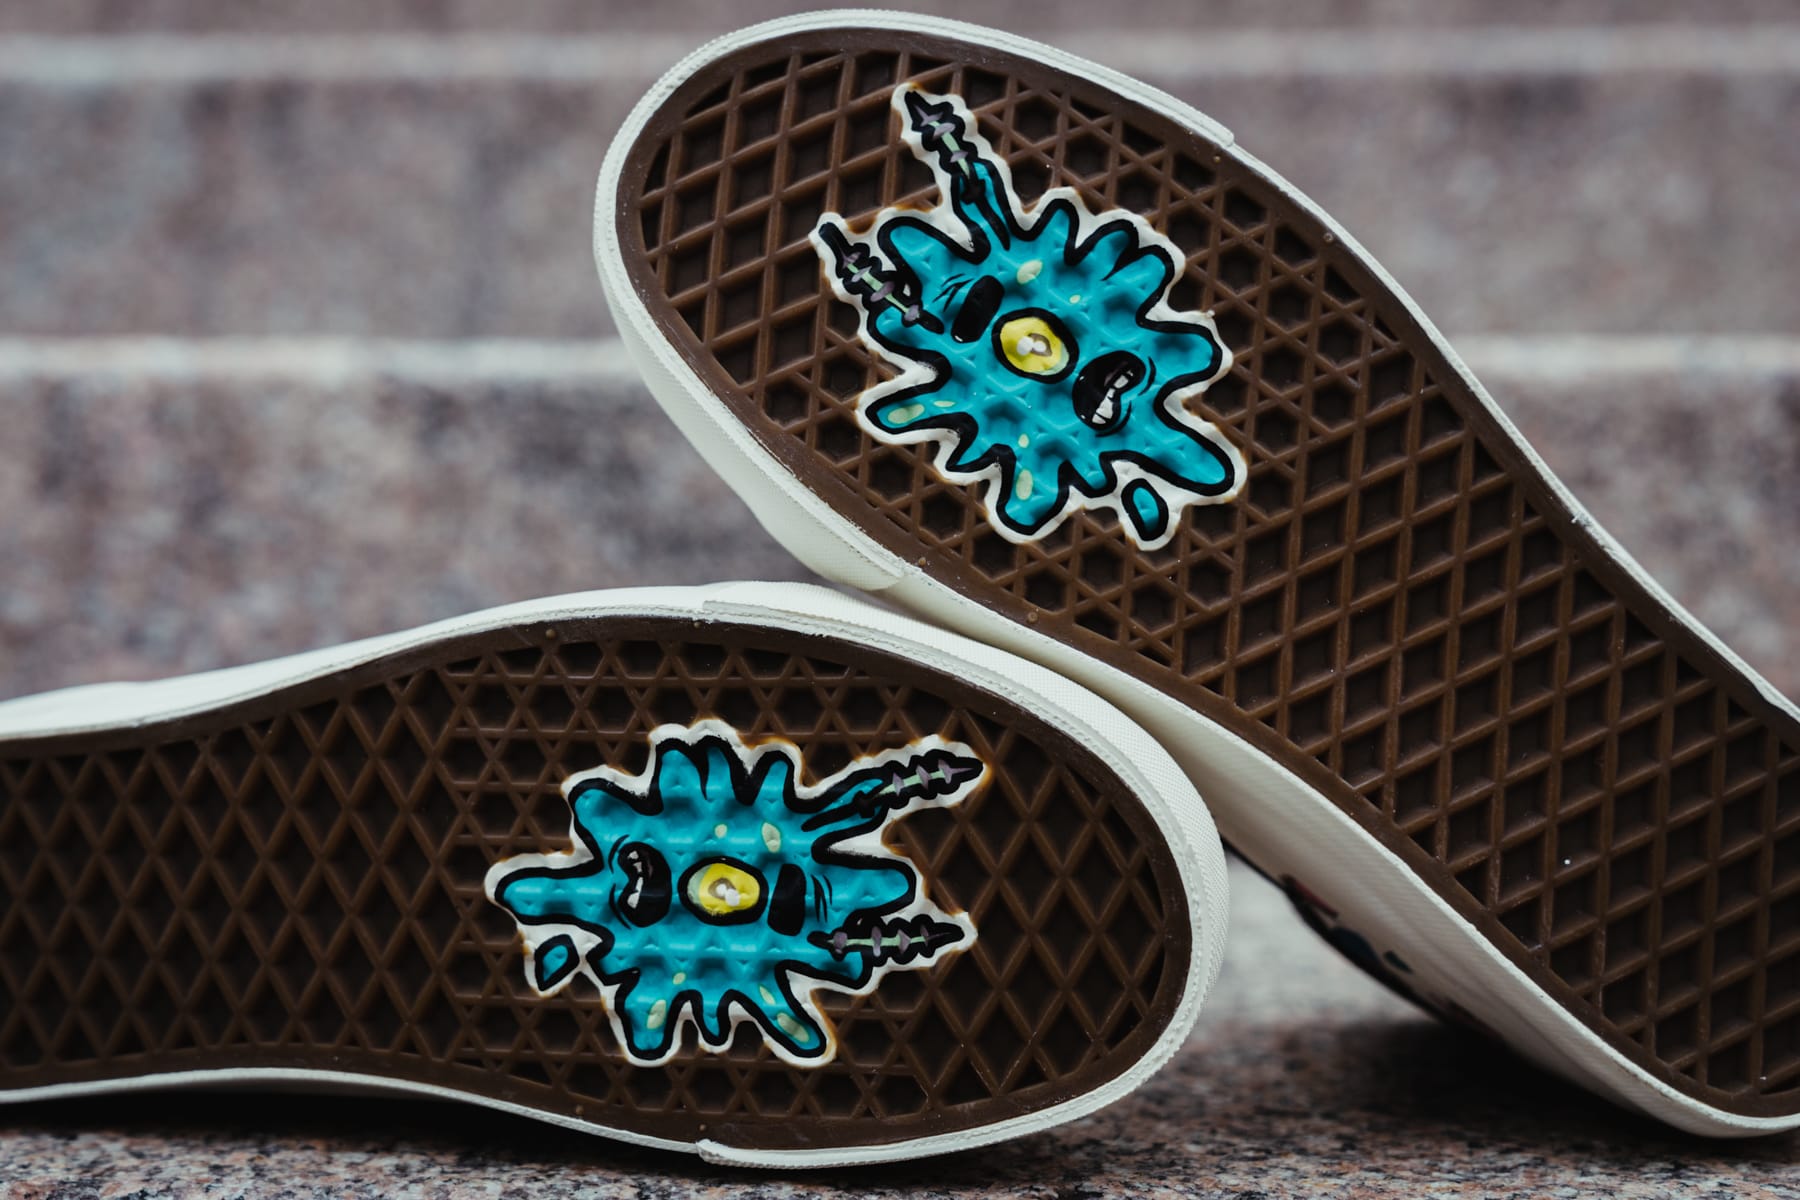 plankton spongebob shoes